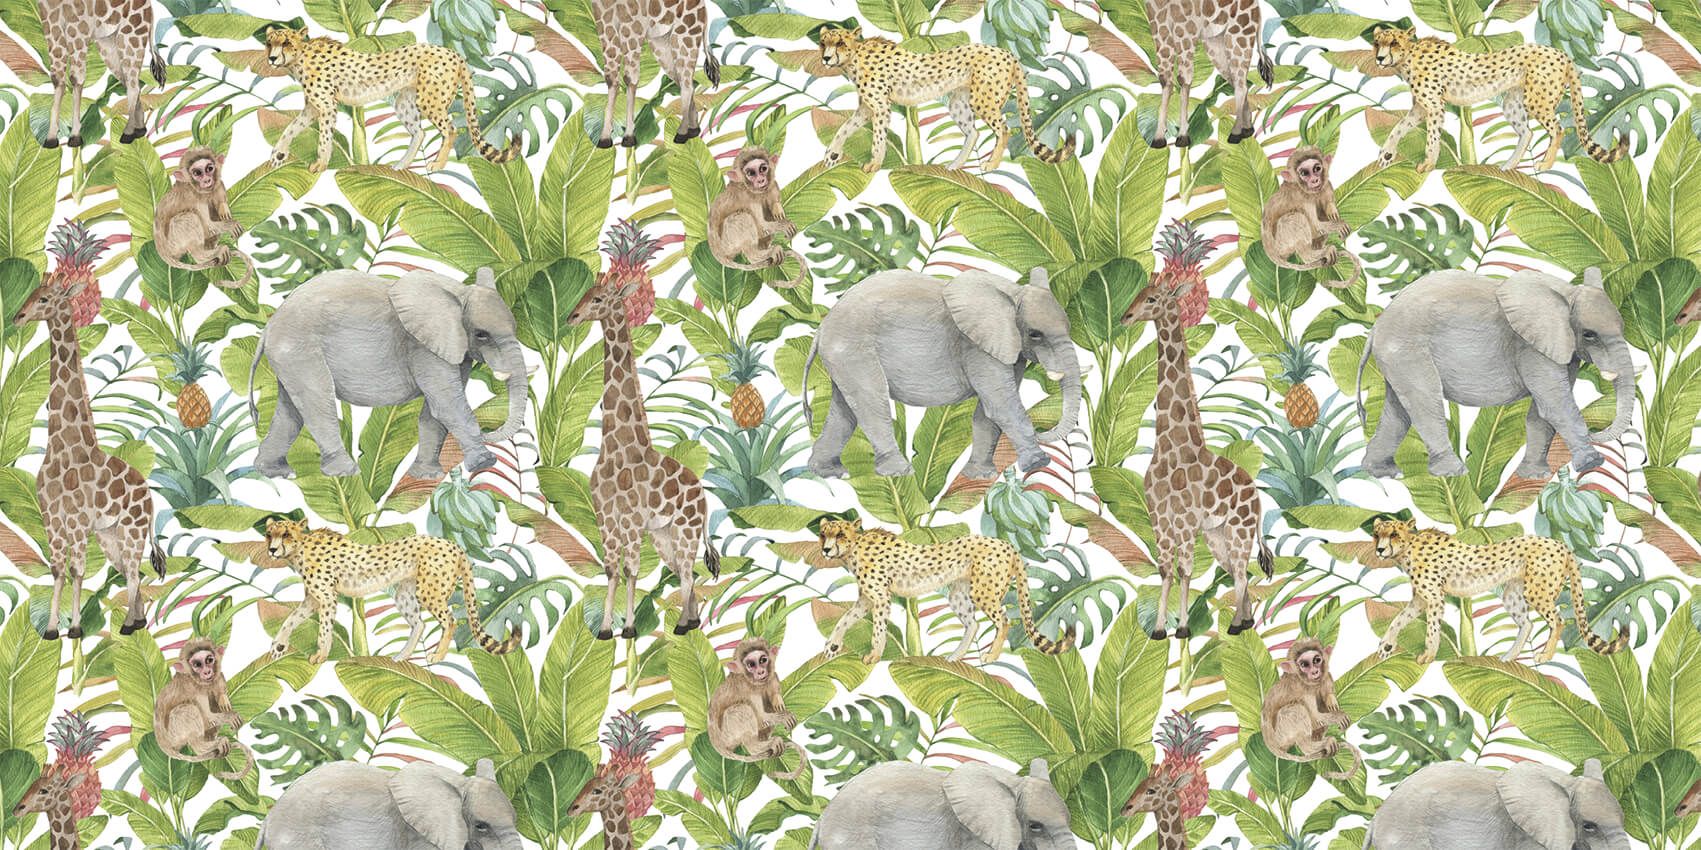 Wild exotic animals - Wallpaper